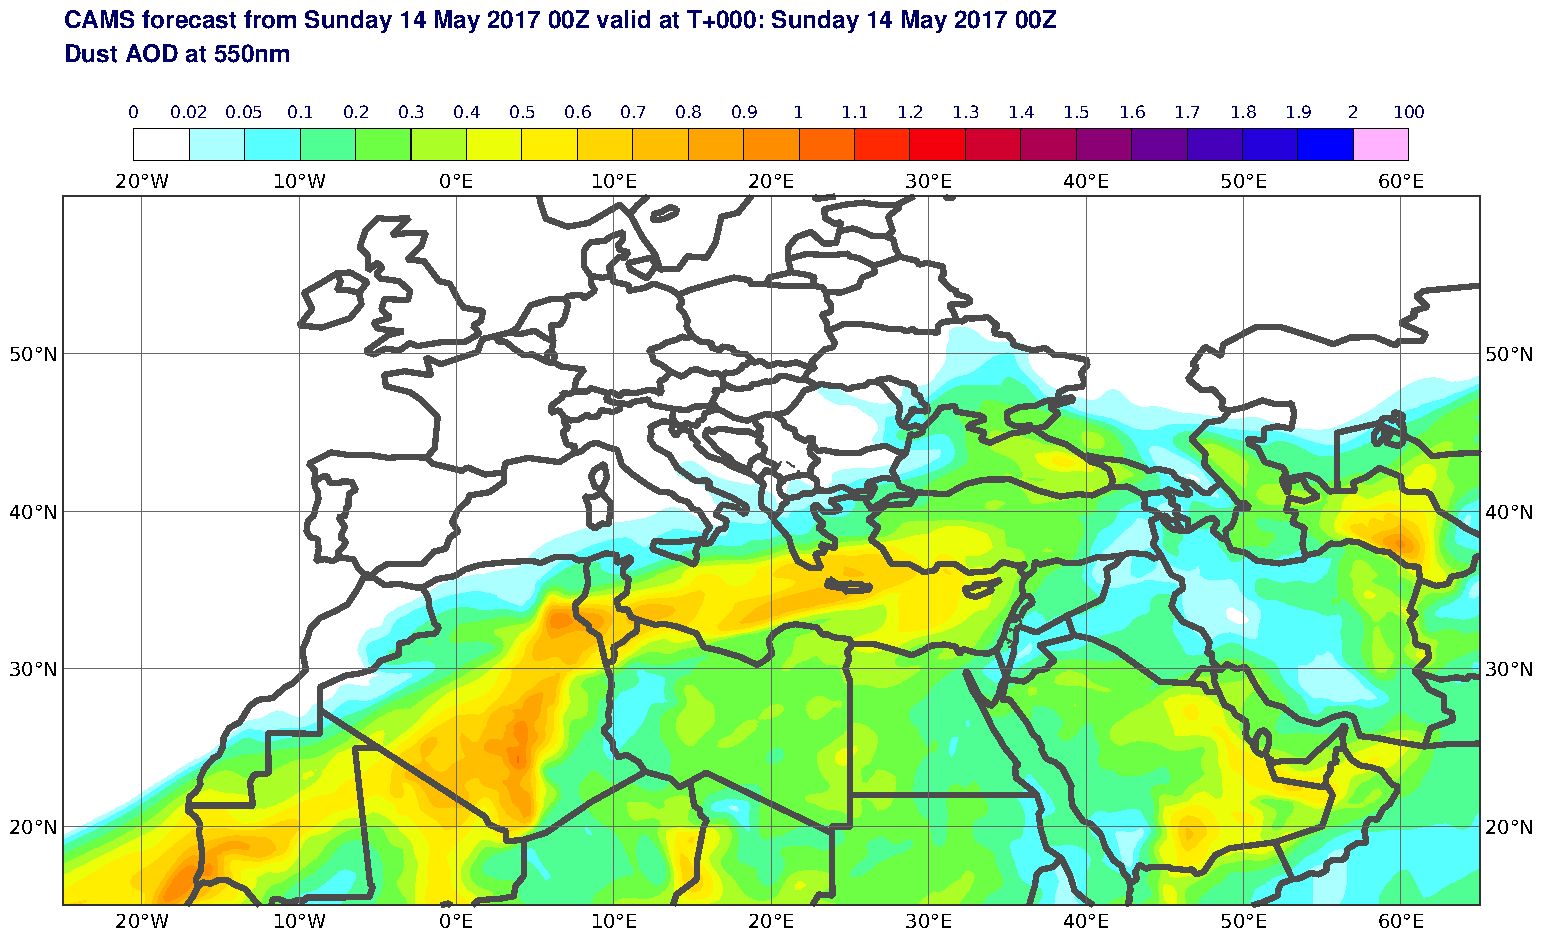 Dust AOD at 550nm valid at T0 - 2017-05-14 00:00